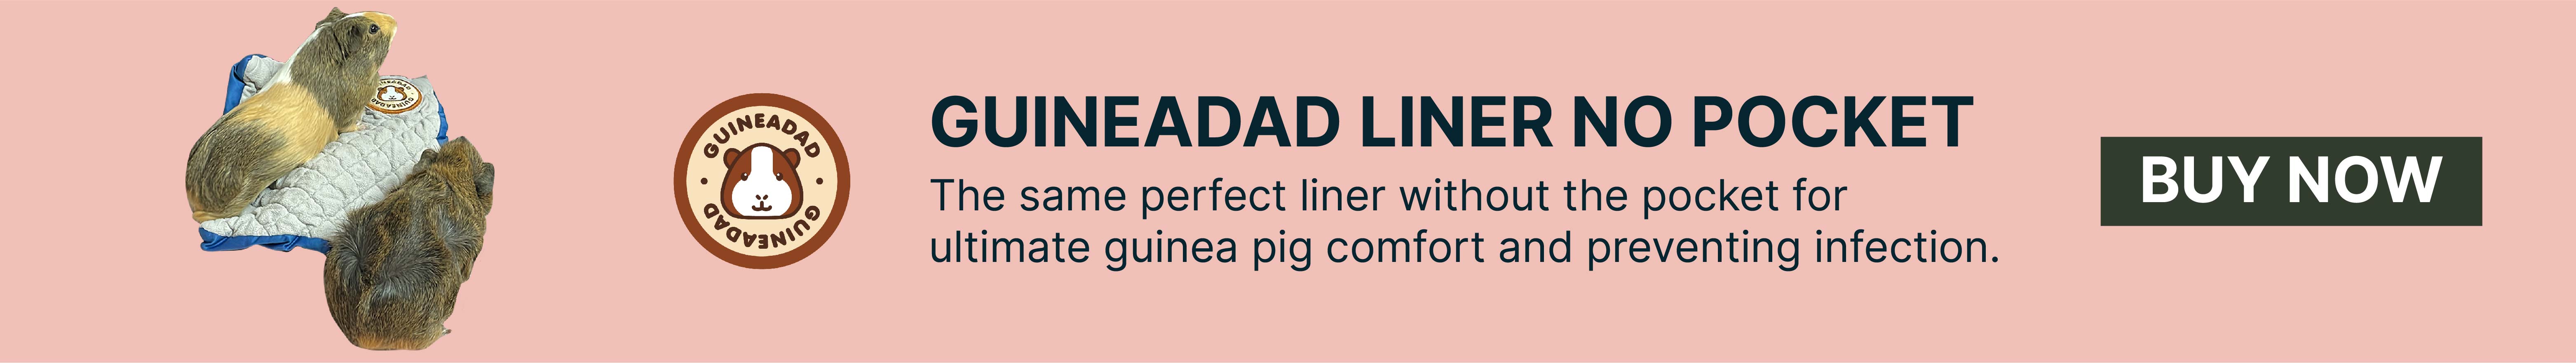 GuineaDad liner with no pocket